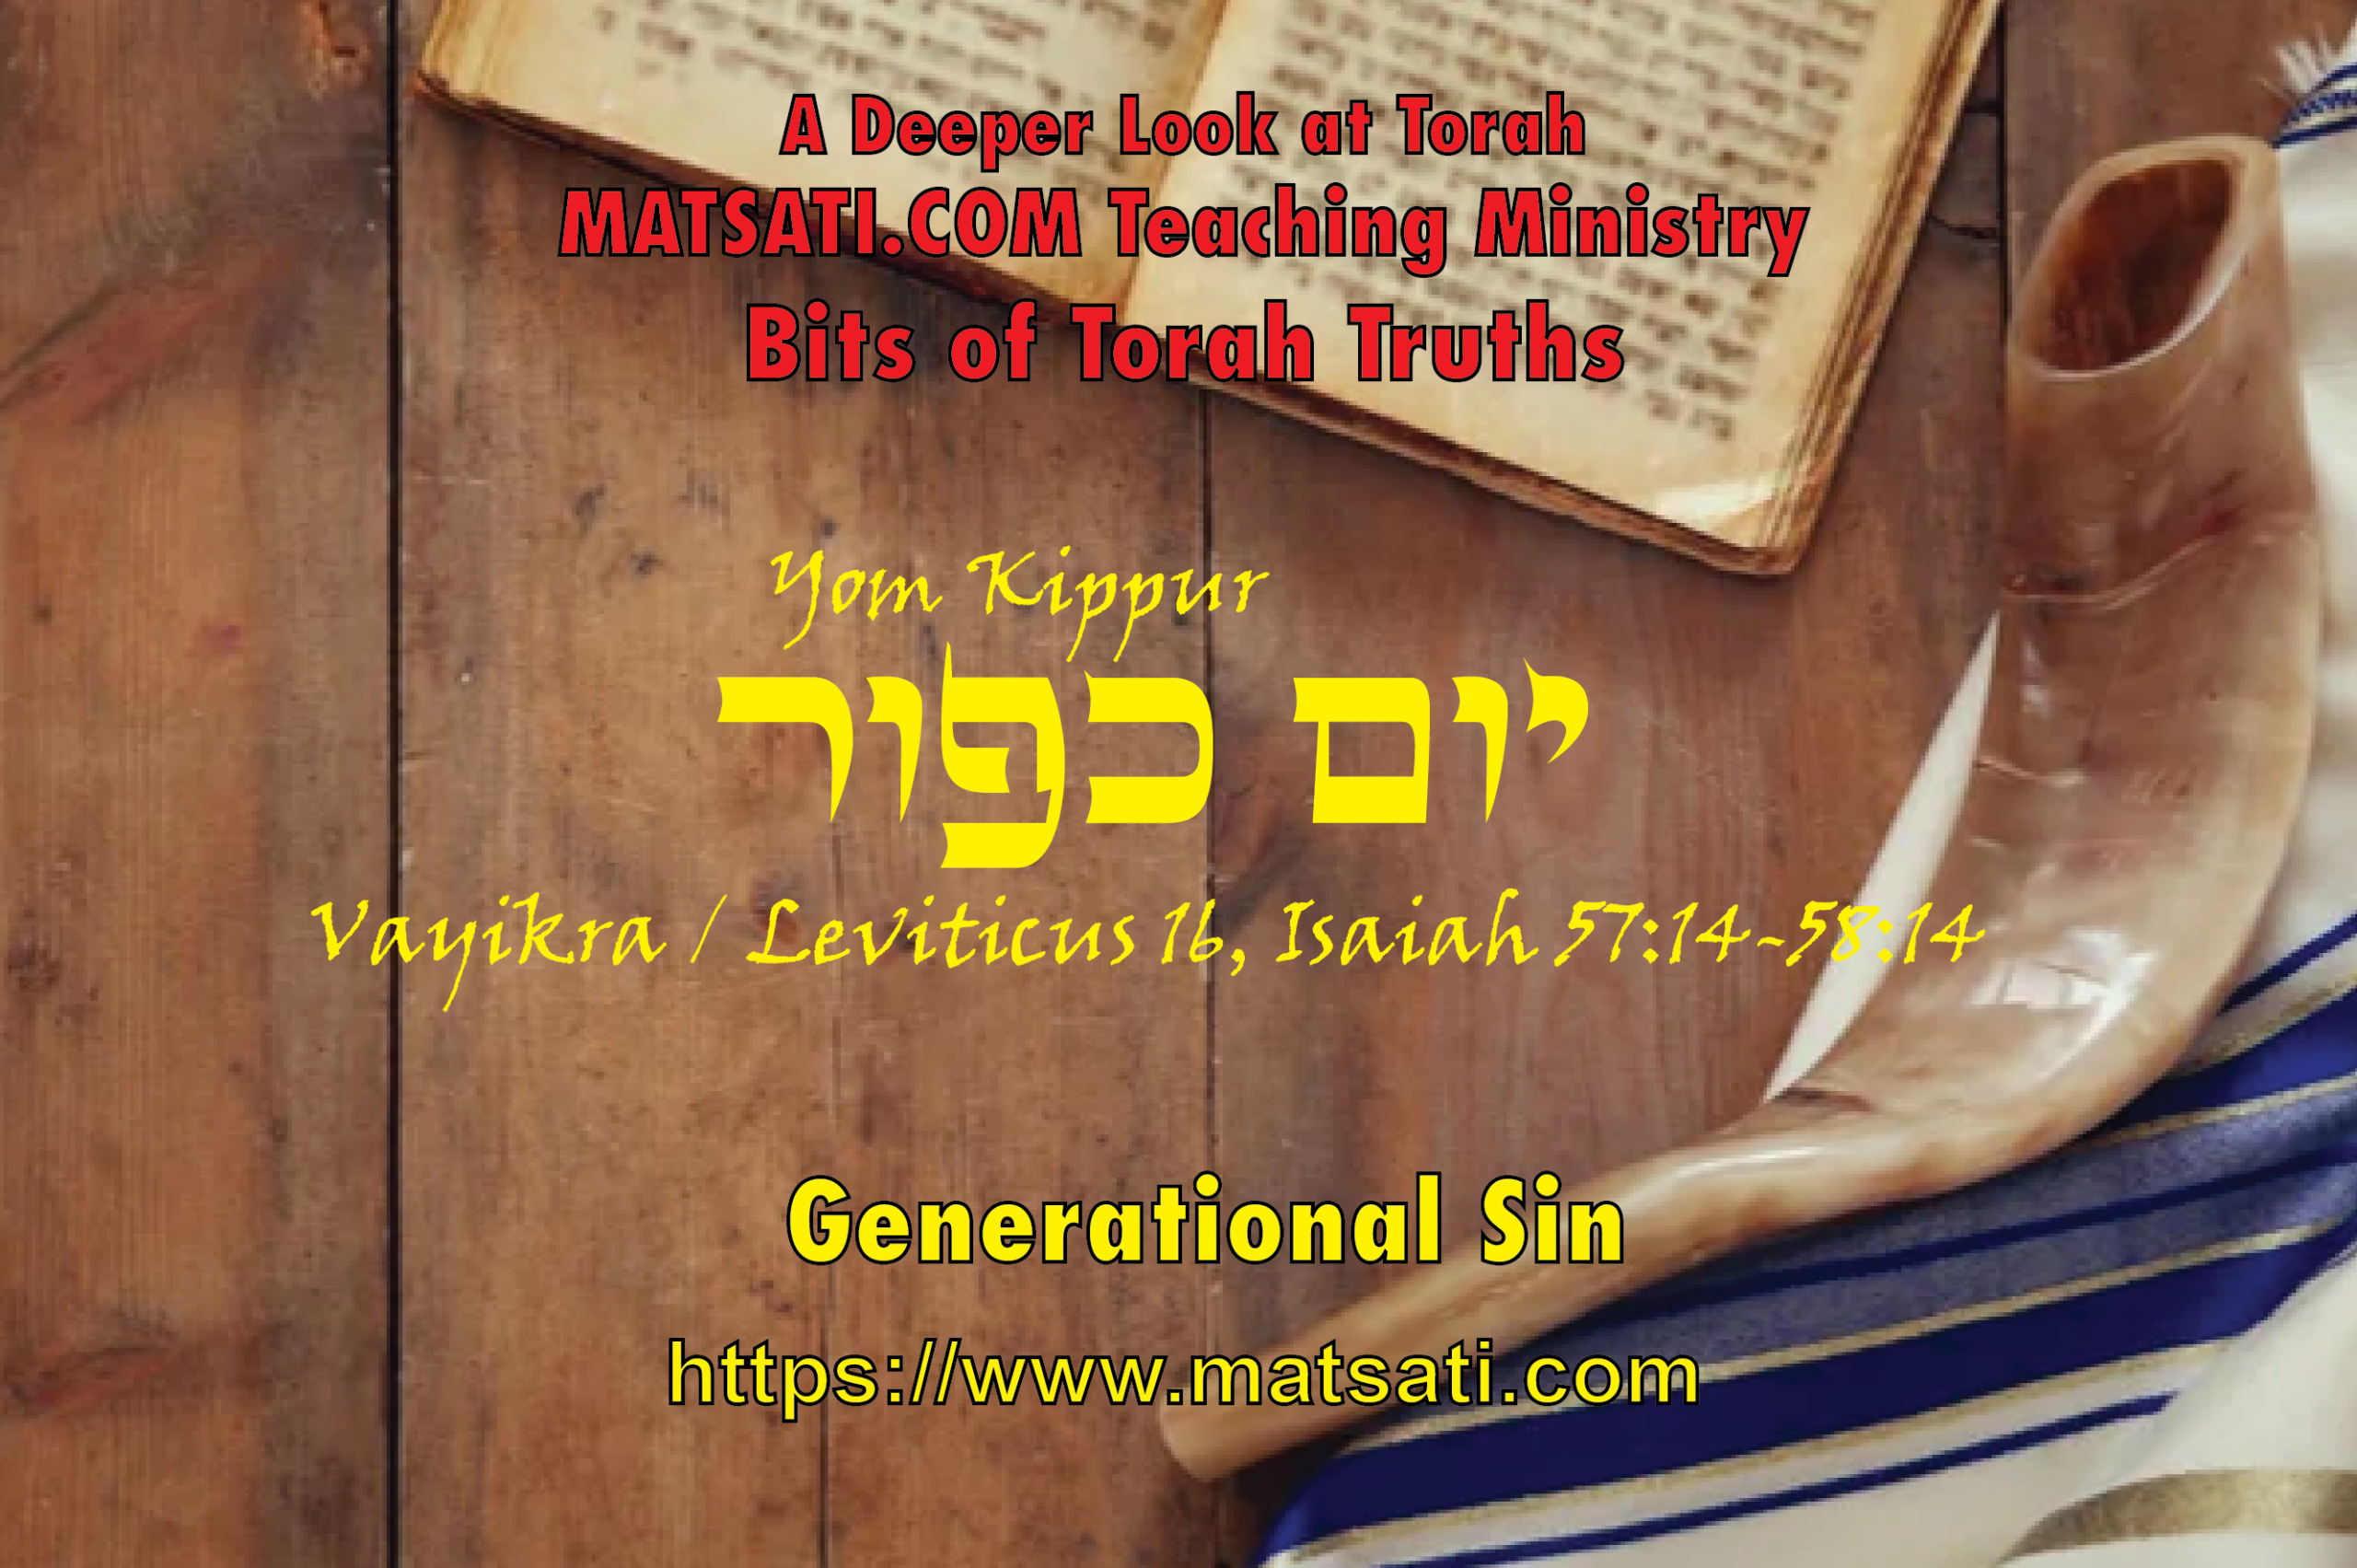 Generational Sin, יום כפור, Yom Kippur, Bits Of Torah Truths | Matsati.com Teaching Ministry